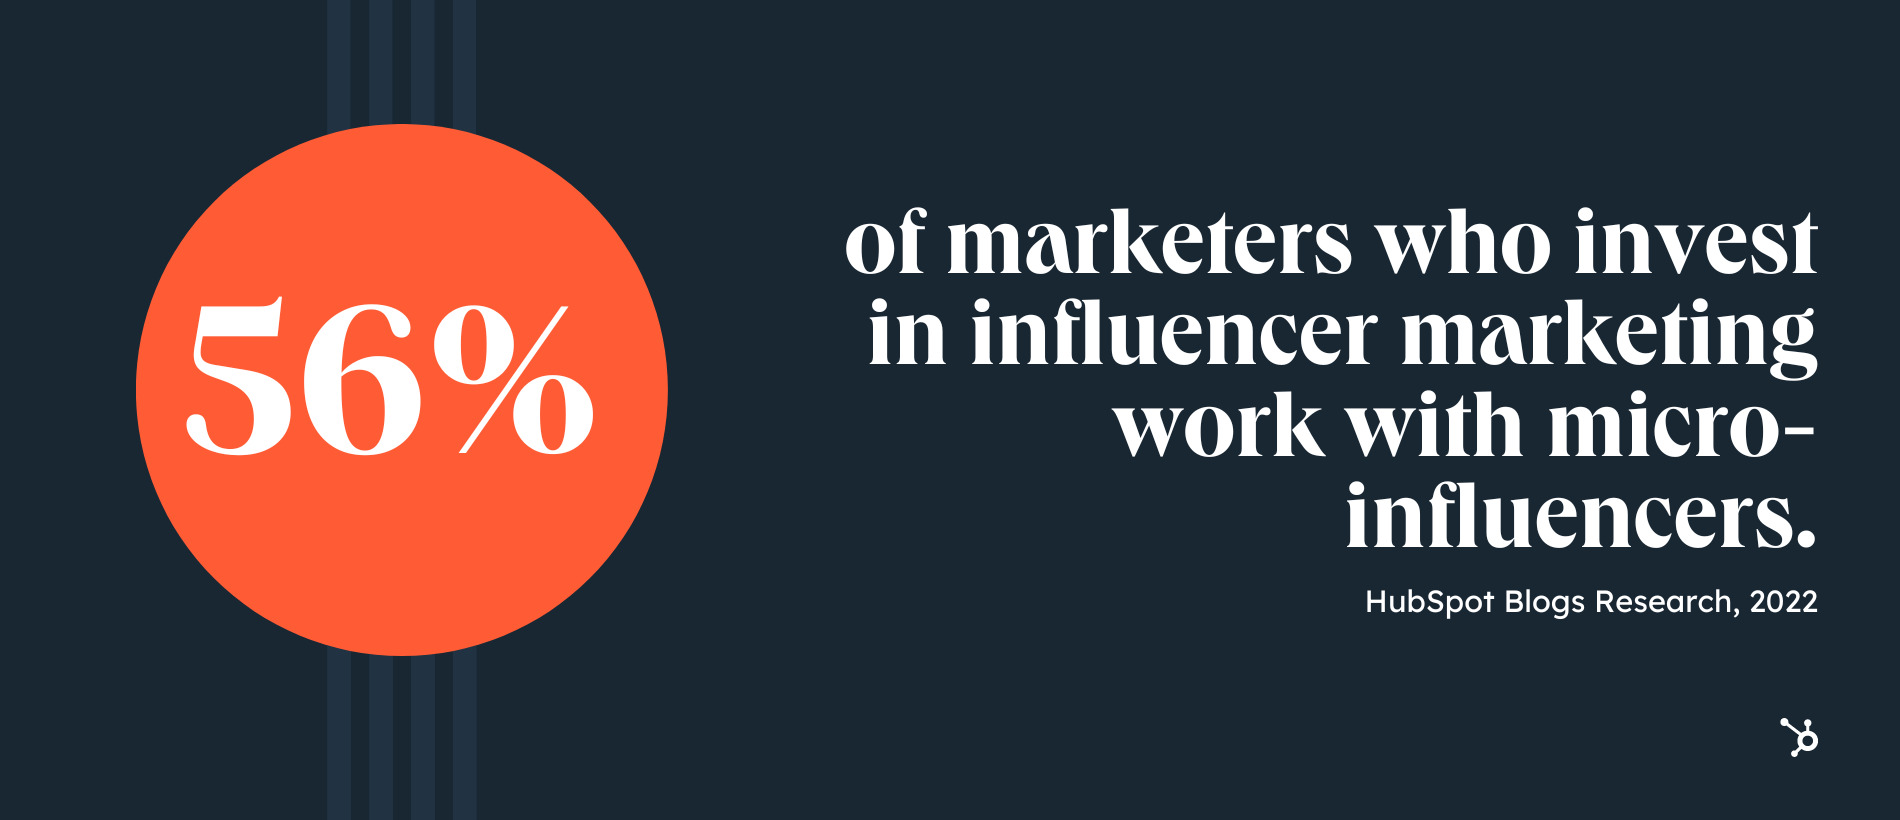 Influencer Marketing Statistics